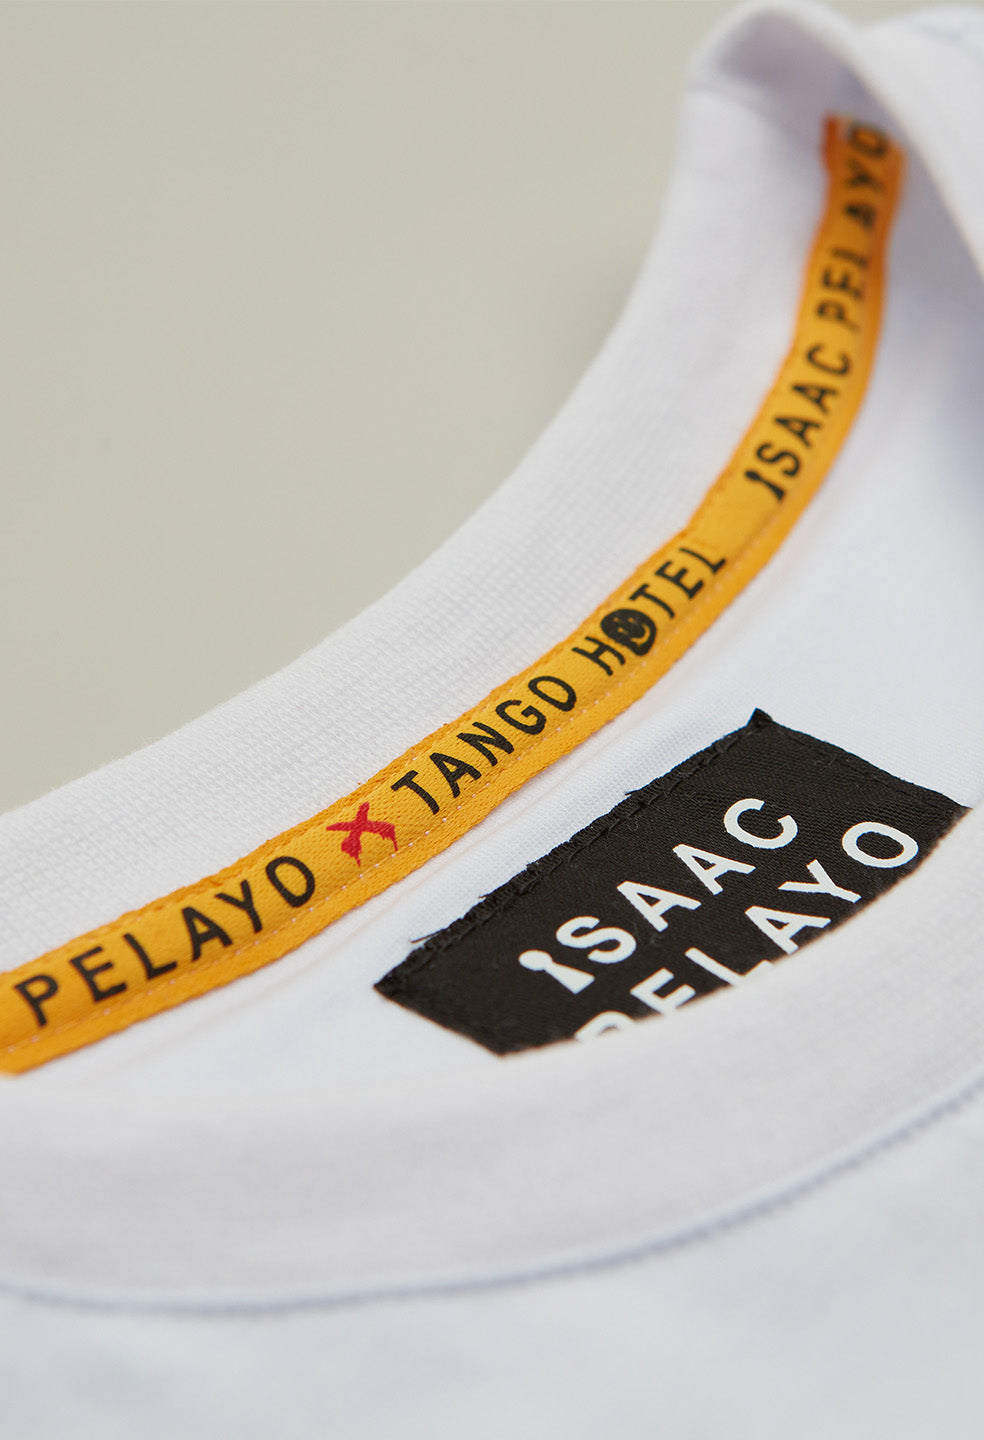 Pelayo Stax T-Shirt